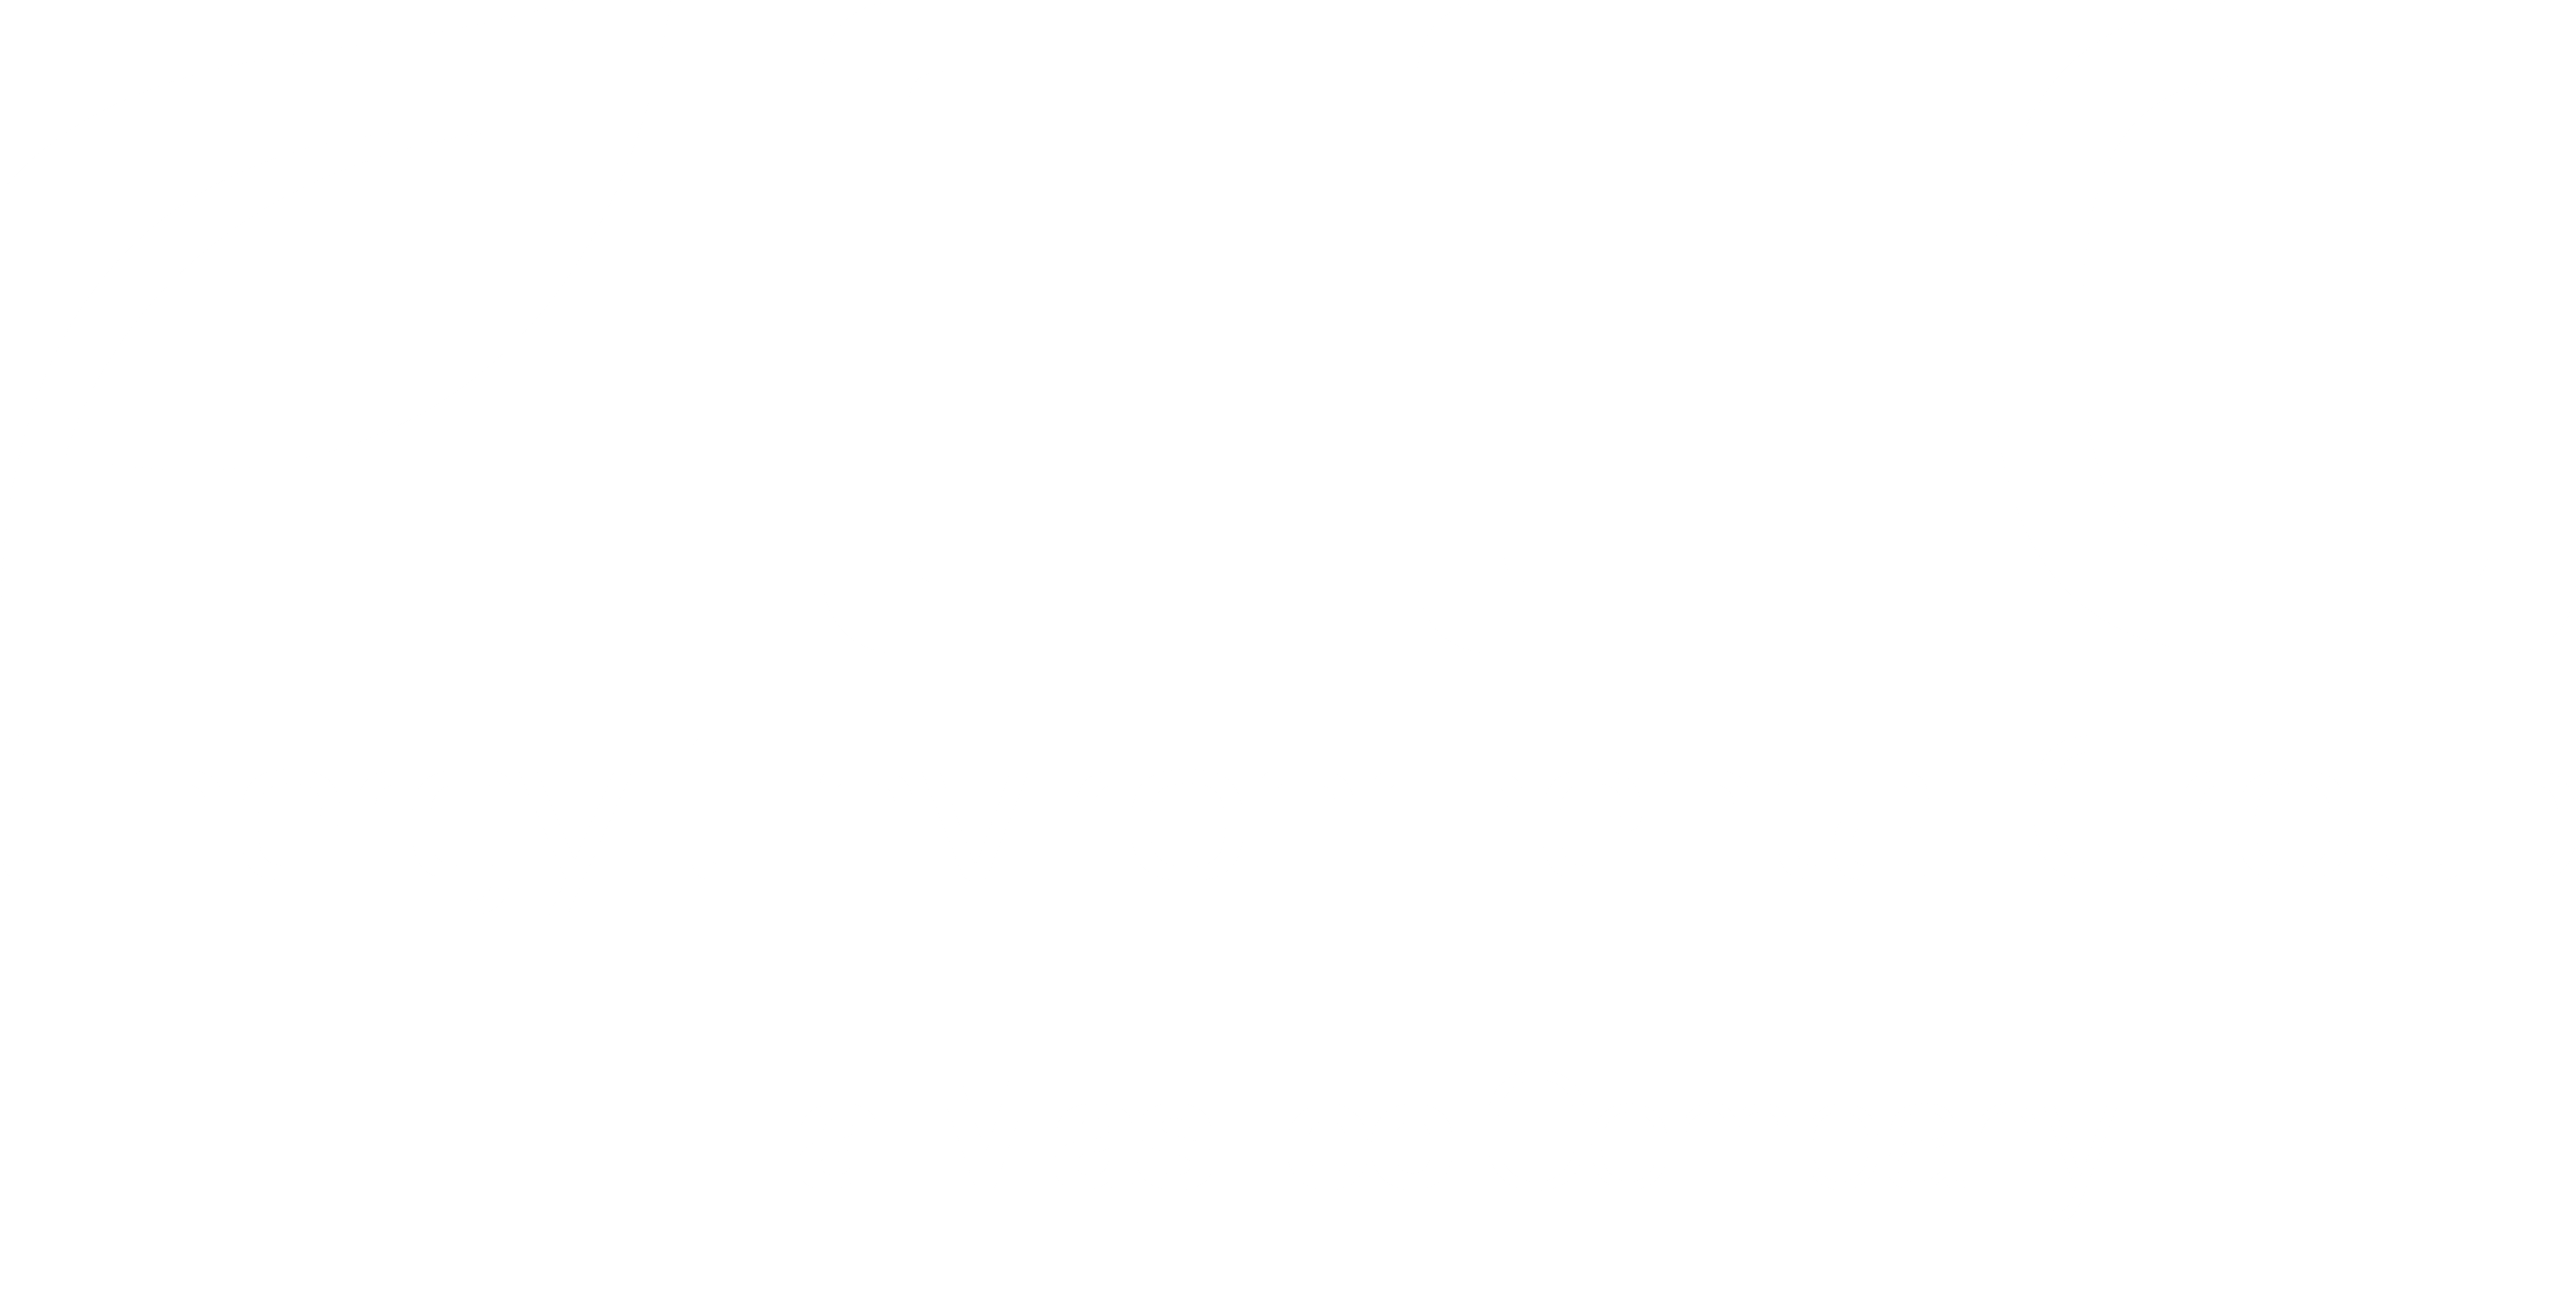 Energy Environmental Group logo